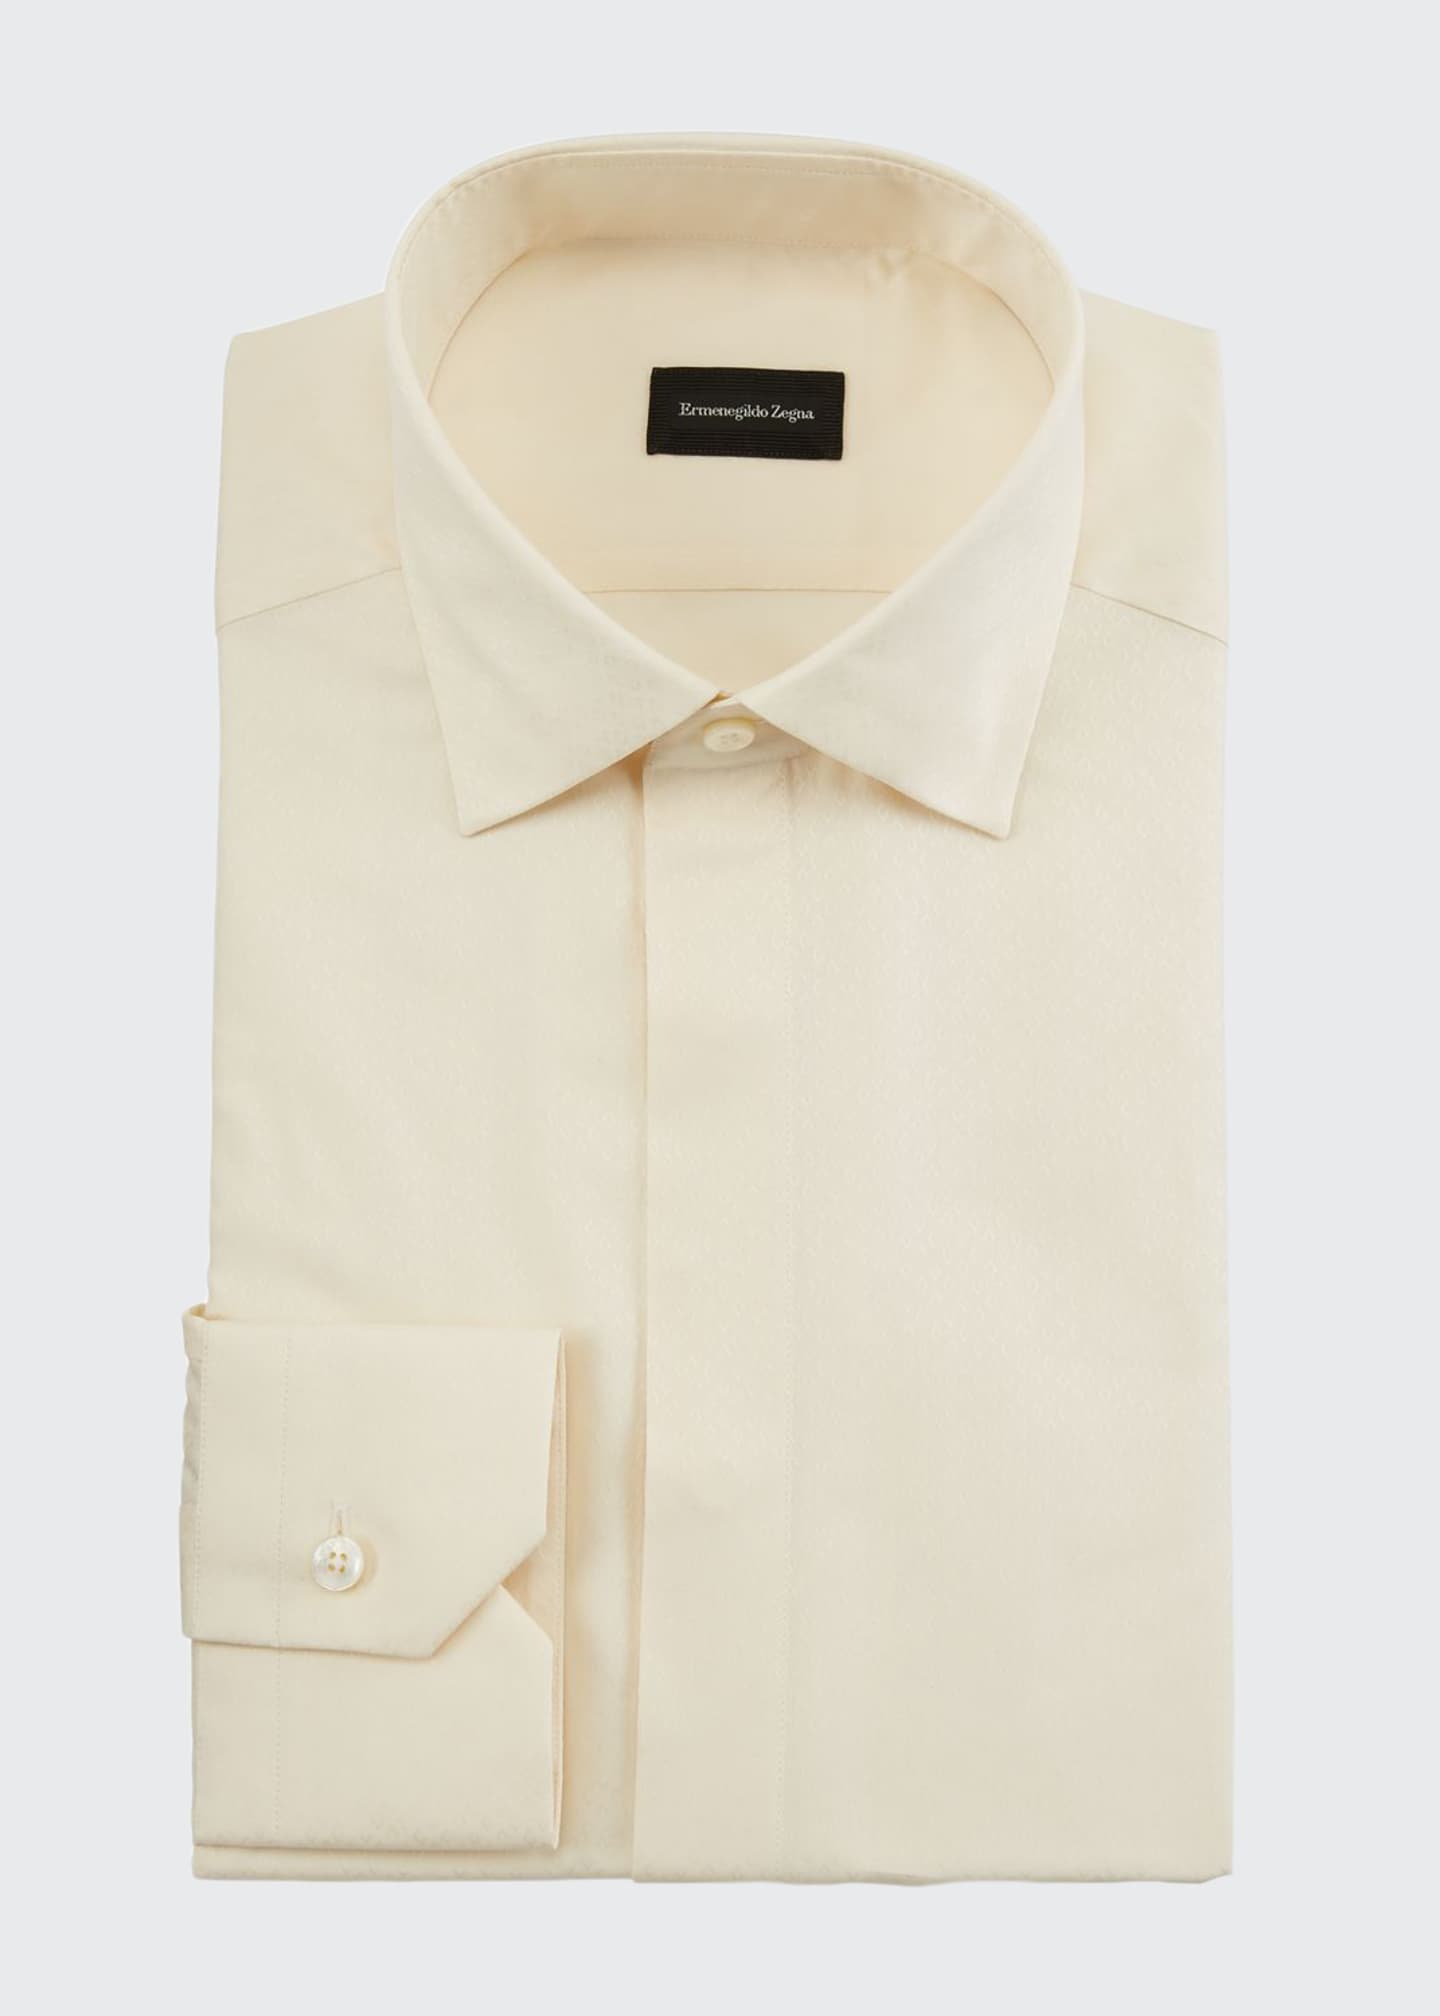 Men’s Dress Shirts at Bergdorf Goodman